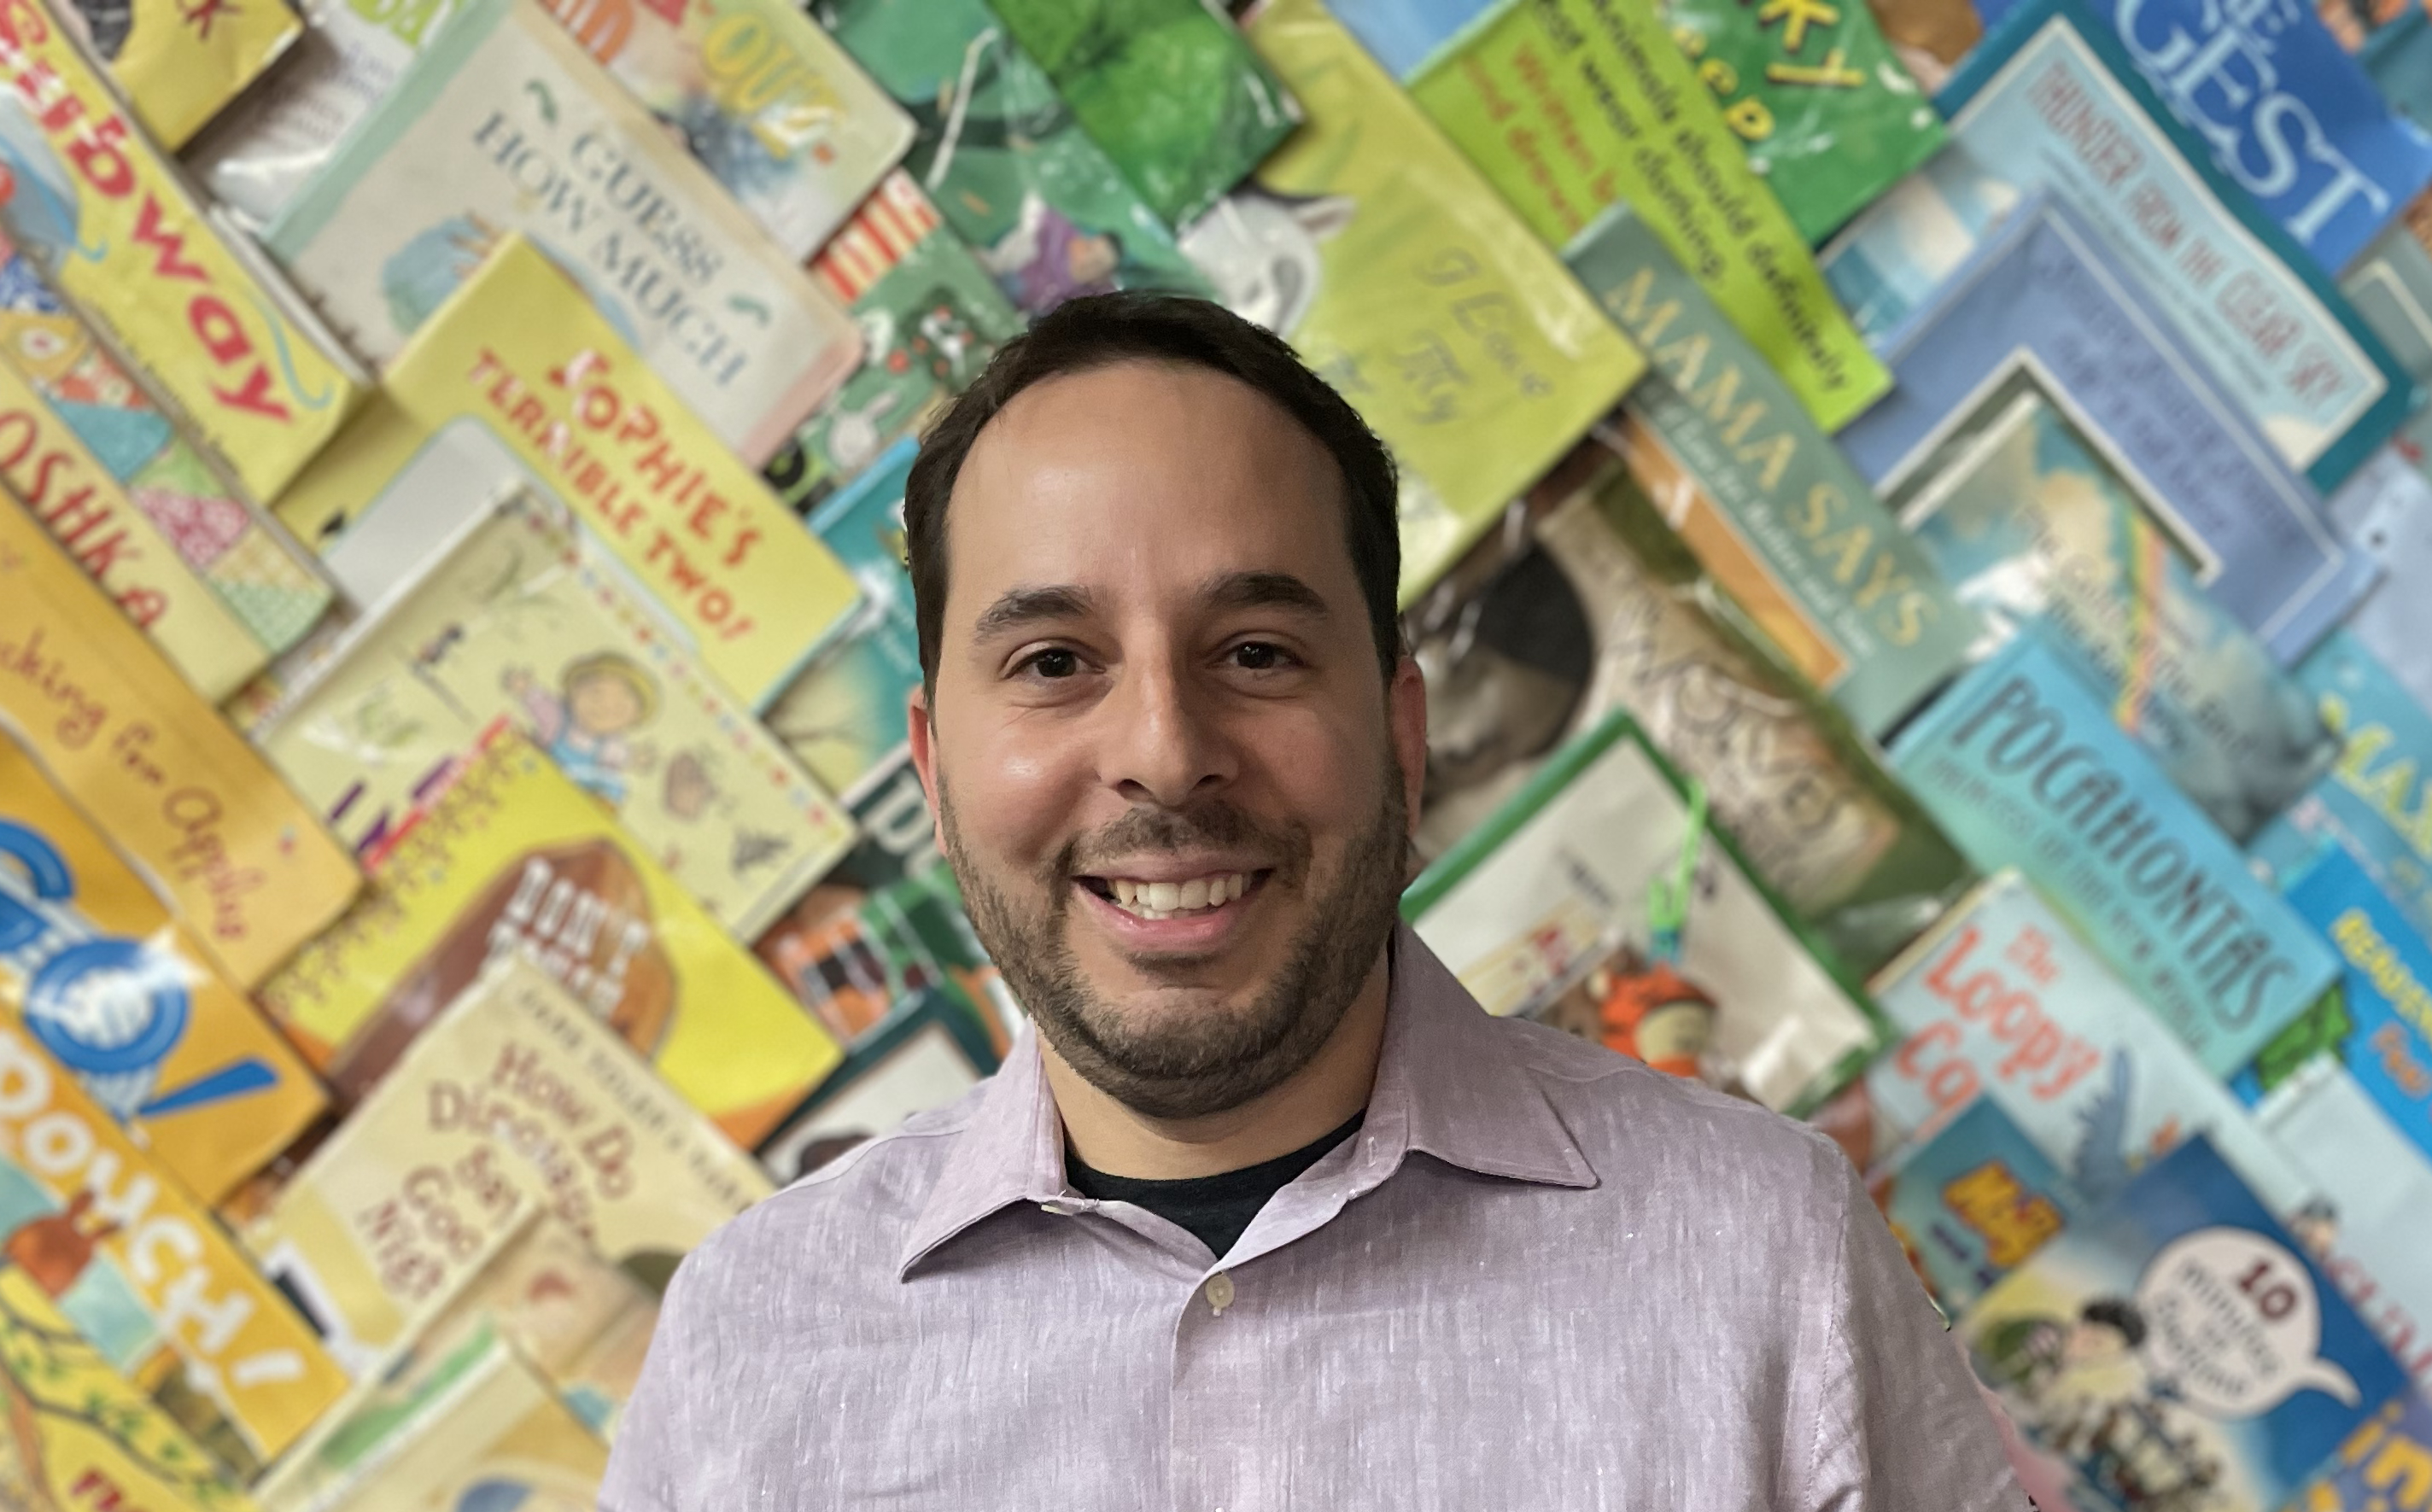 Cleveland Kids' Book Bank executive director Ori Akrish